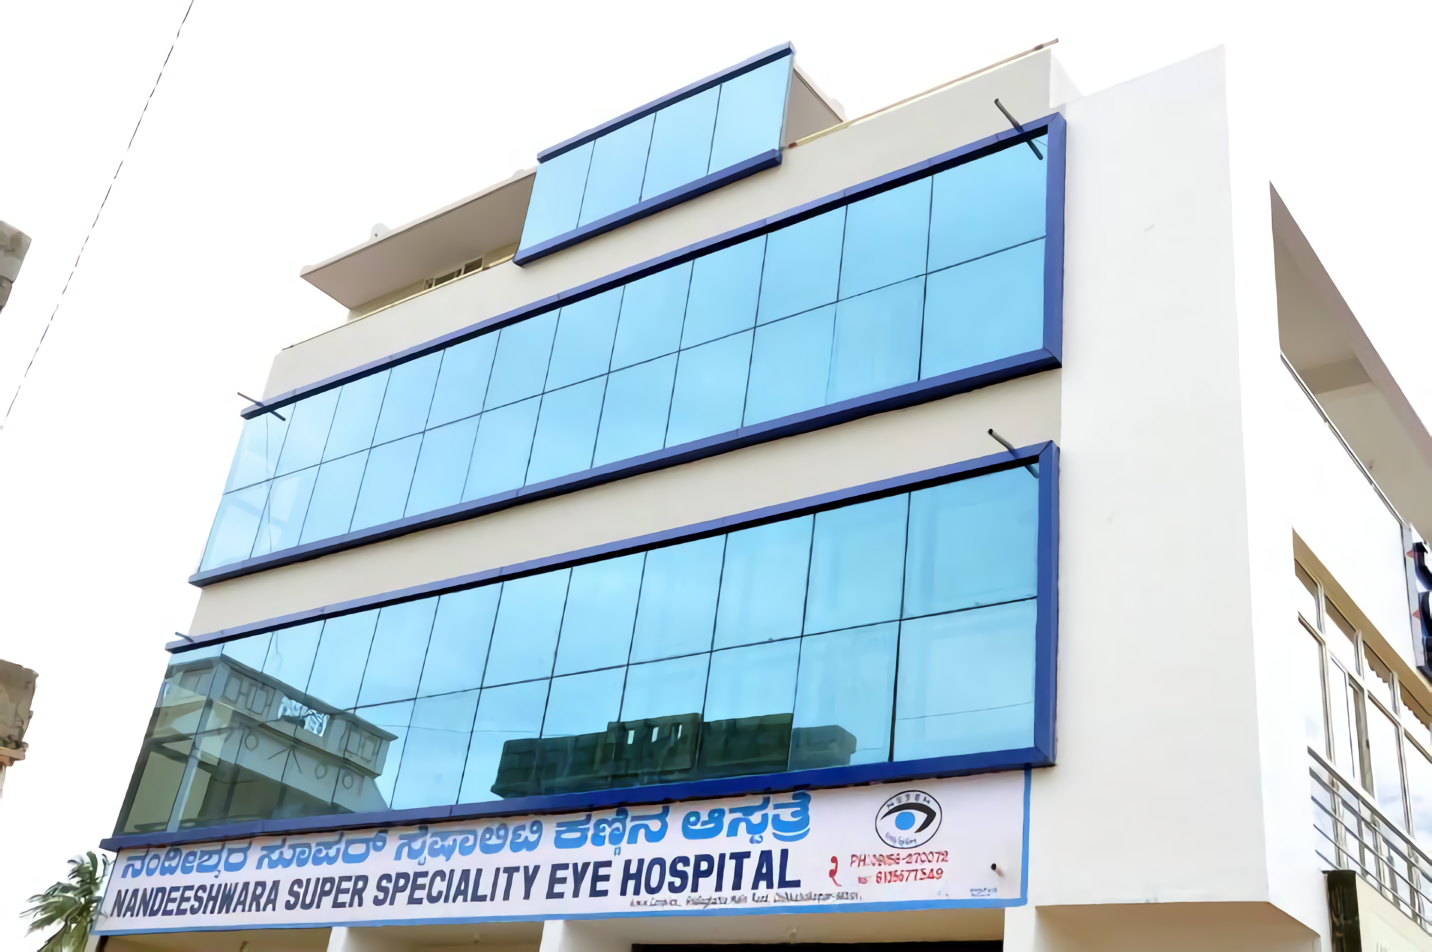 Nandeeshwara Super Speciality Eye Hospital